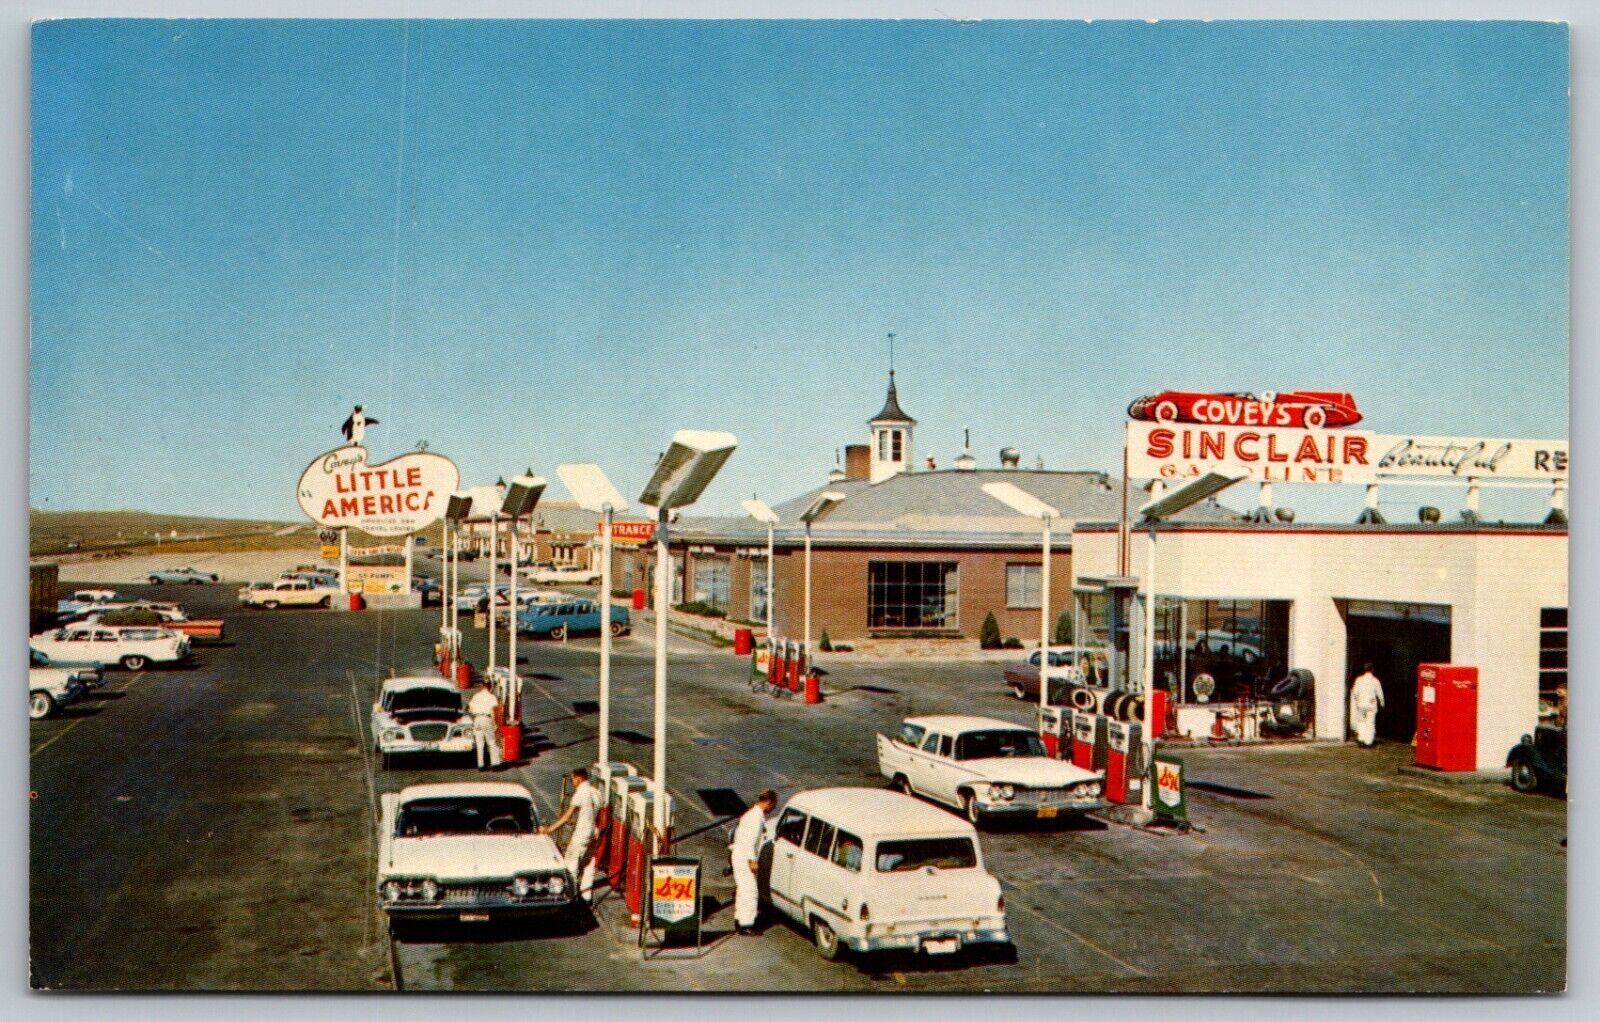 Postcard Covey's Little America Travel Center Granger, Wy. Advertising Sinclair